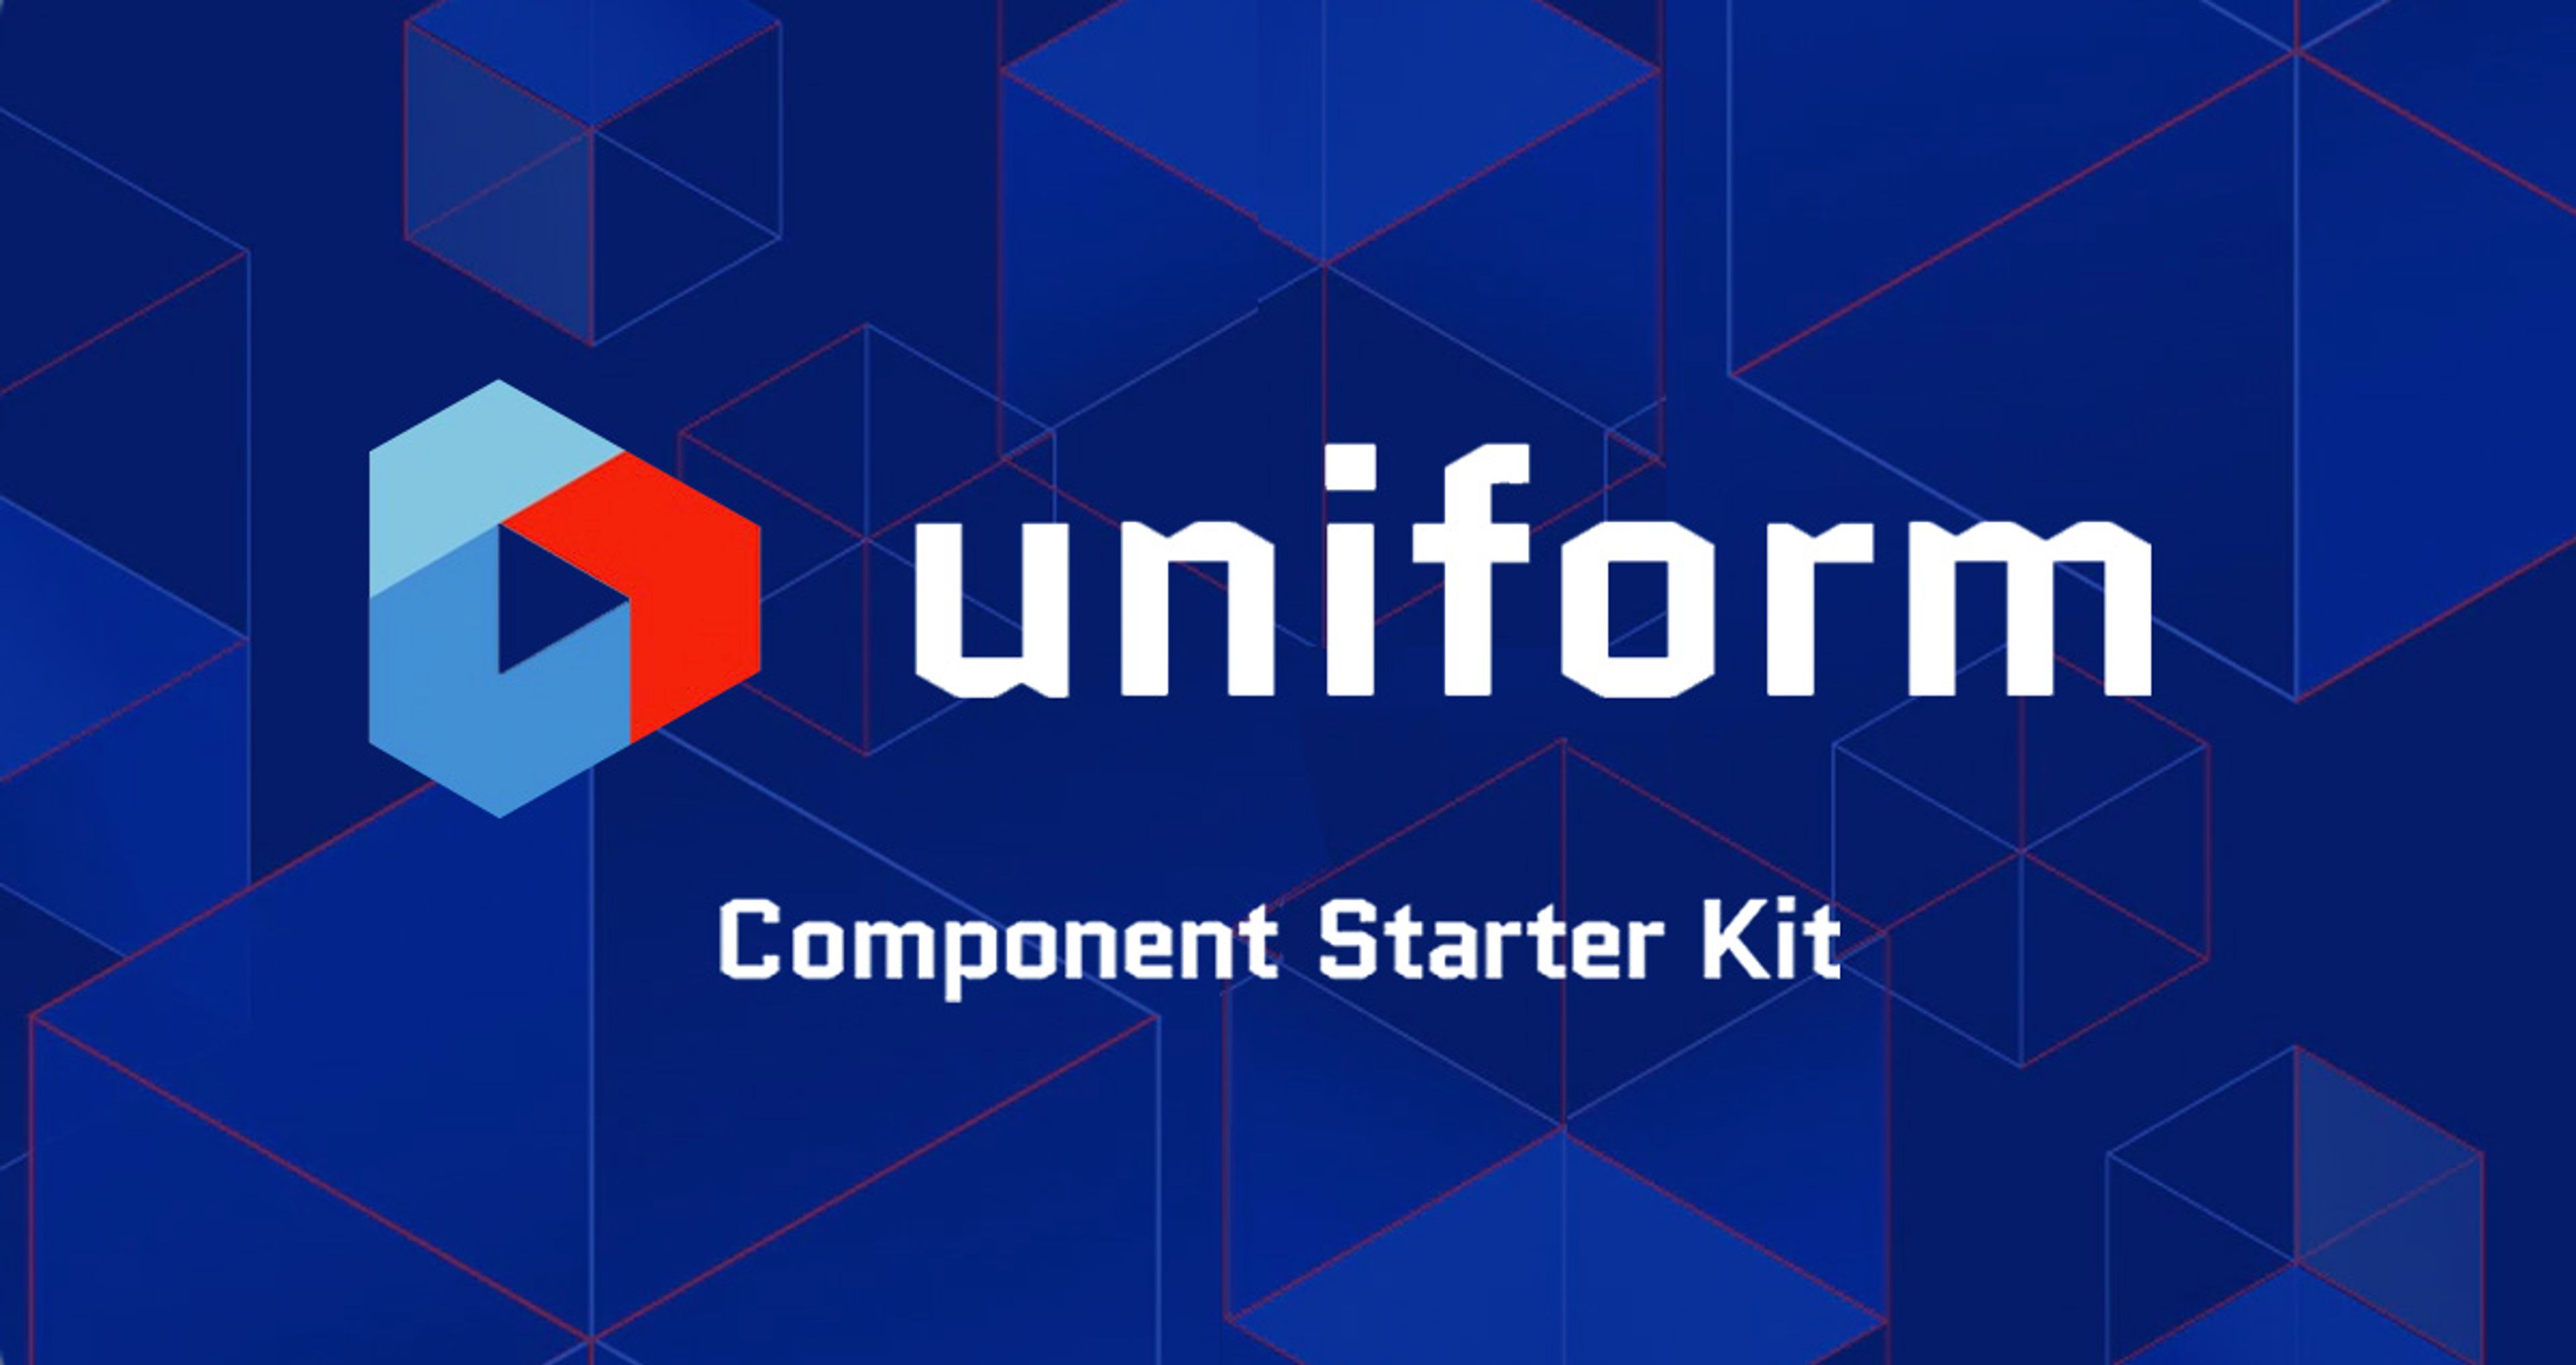 Uniform Component Starter Kit